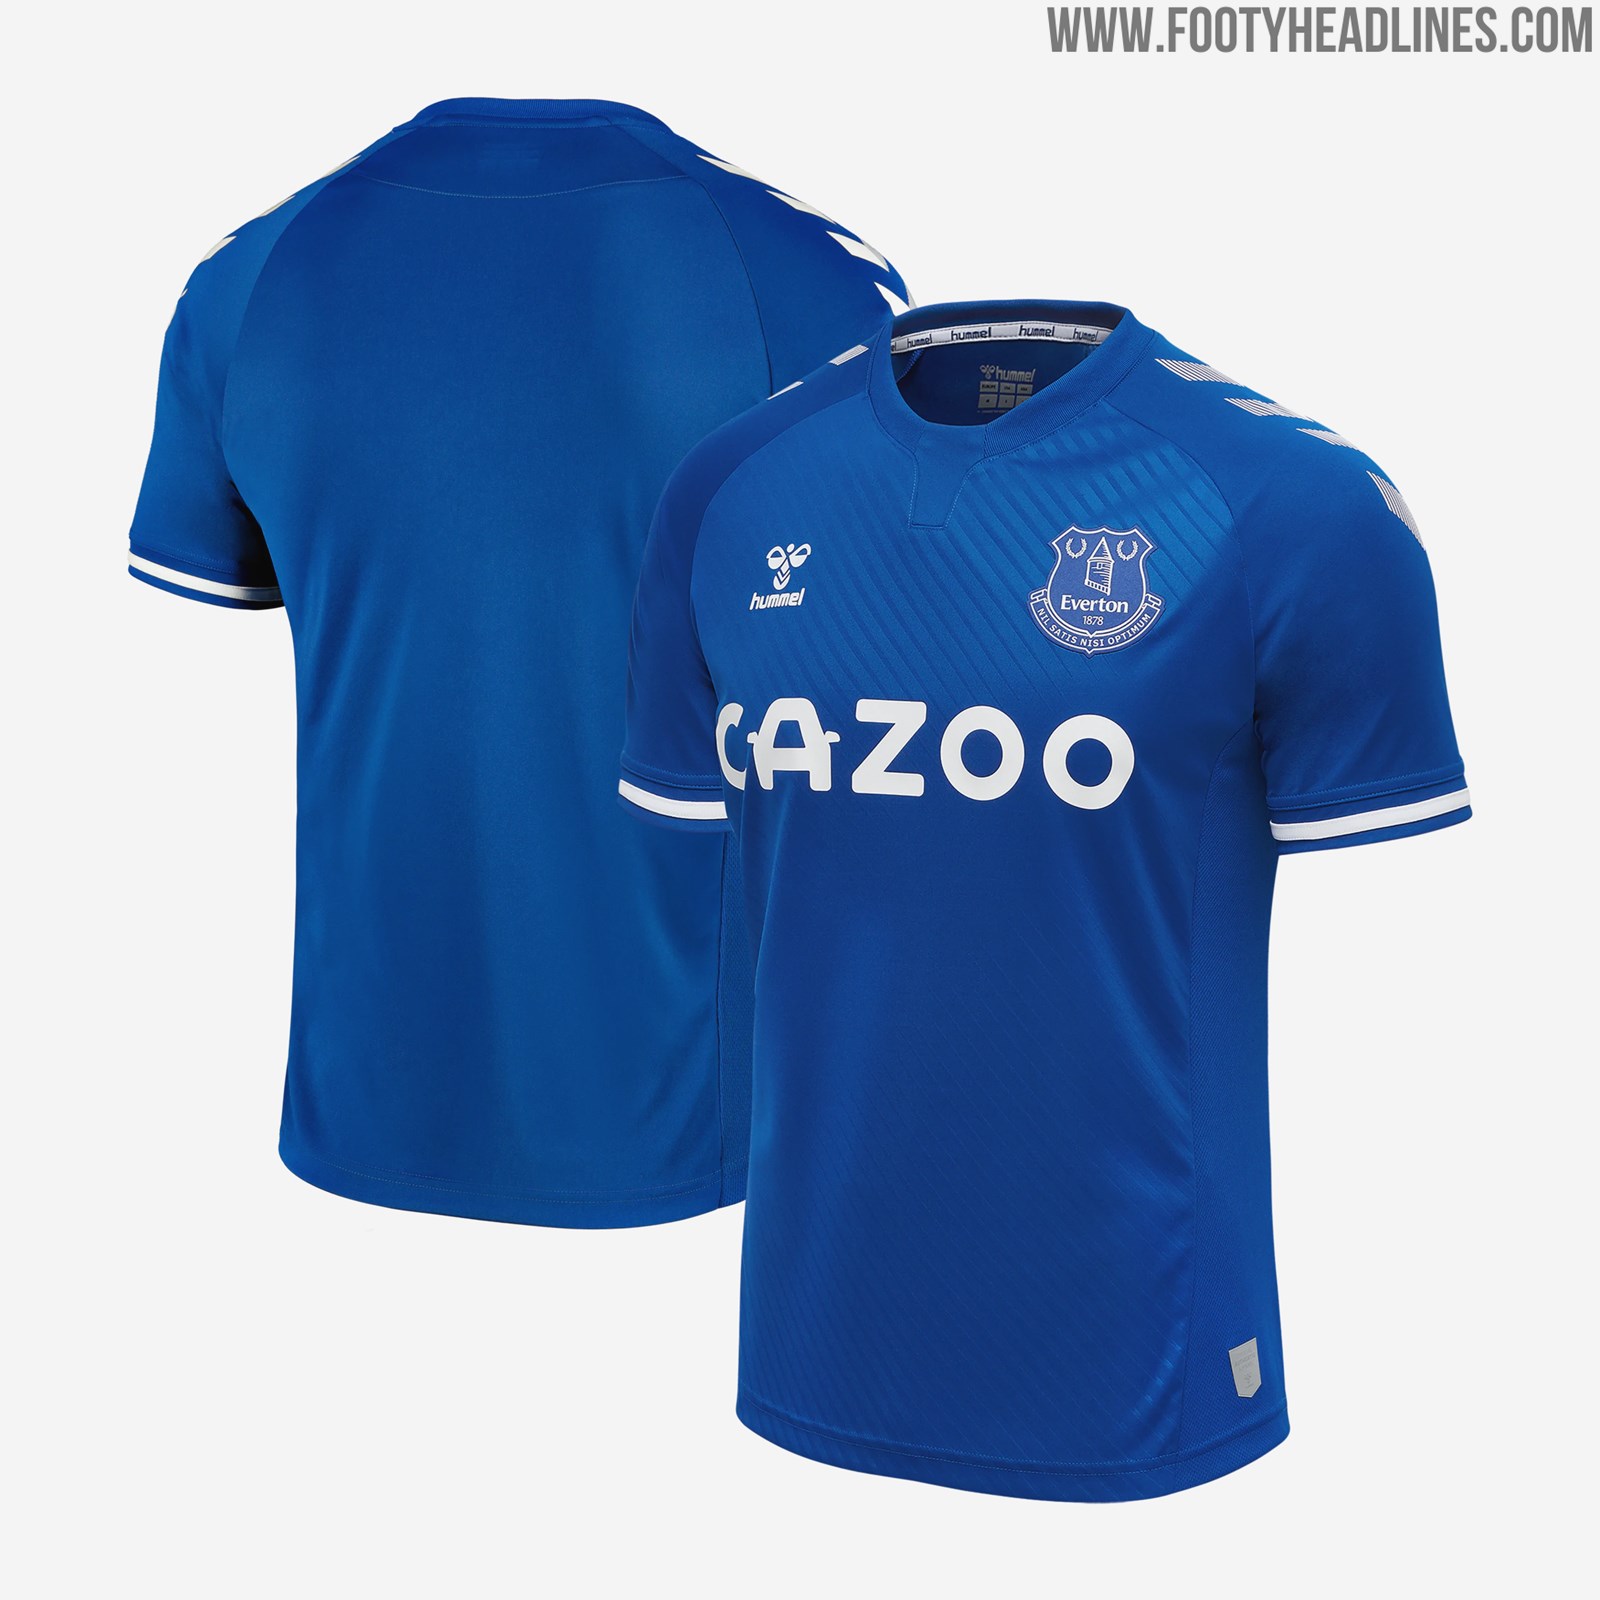 Everton Fc Kit - Everton FC 2017/18 Umbro Third Kit - FOOTBALL FASHION